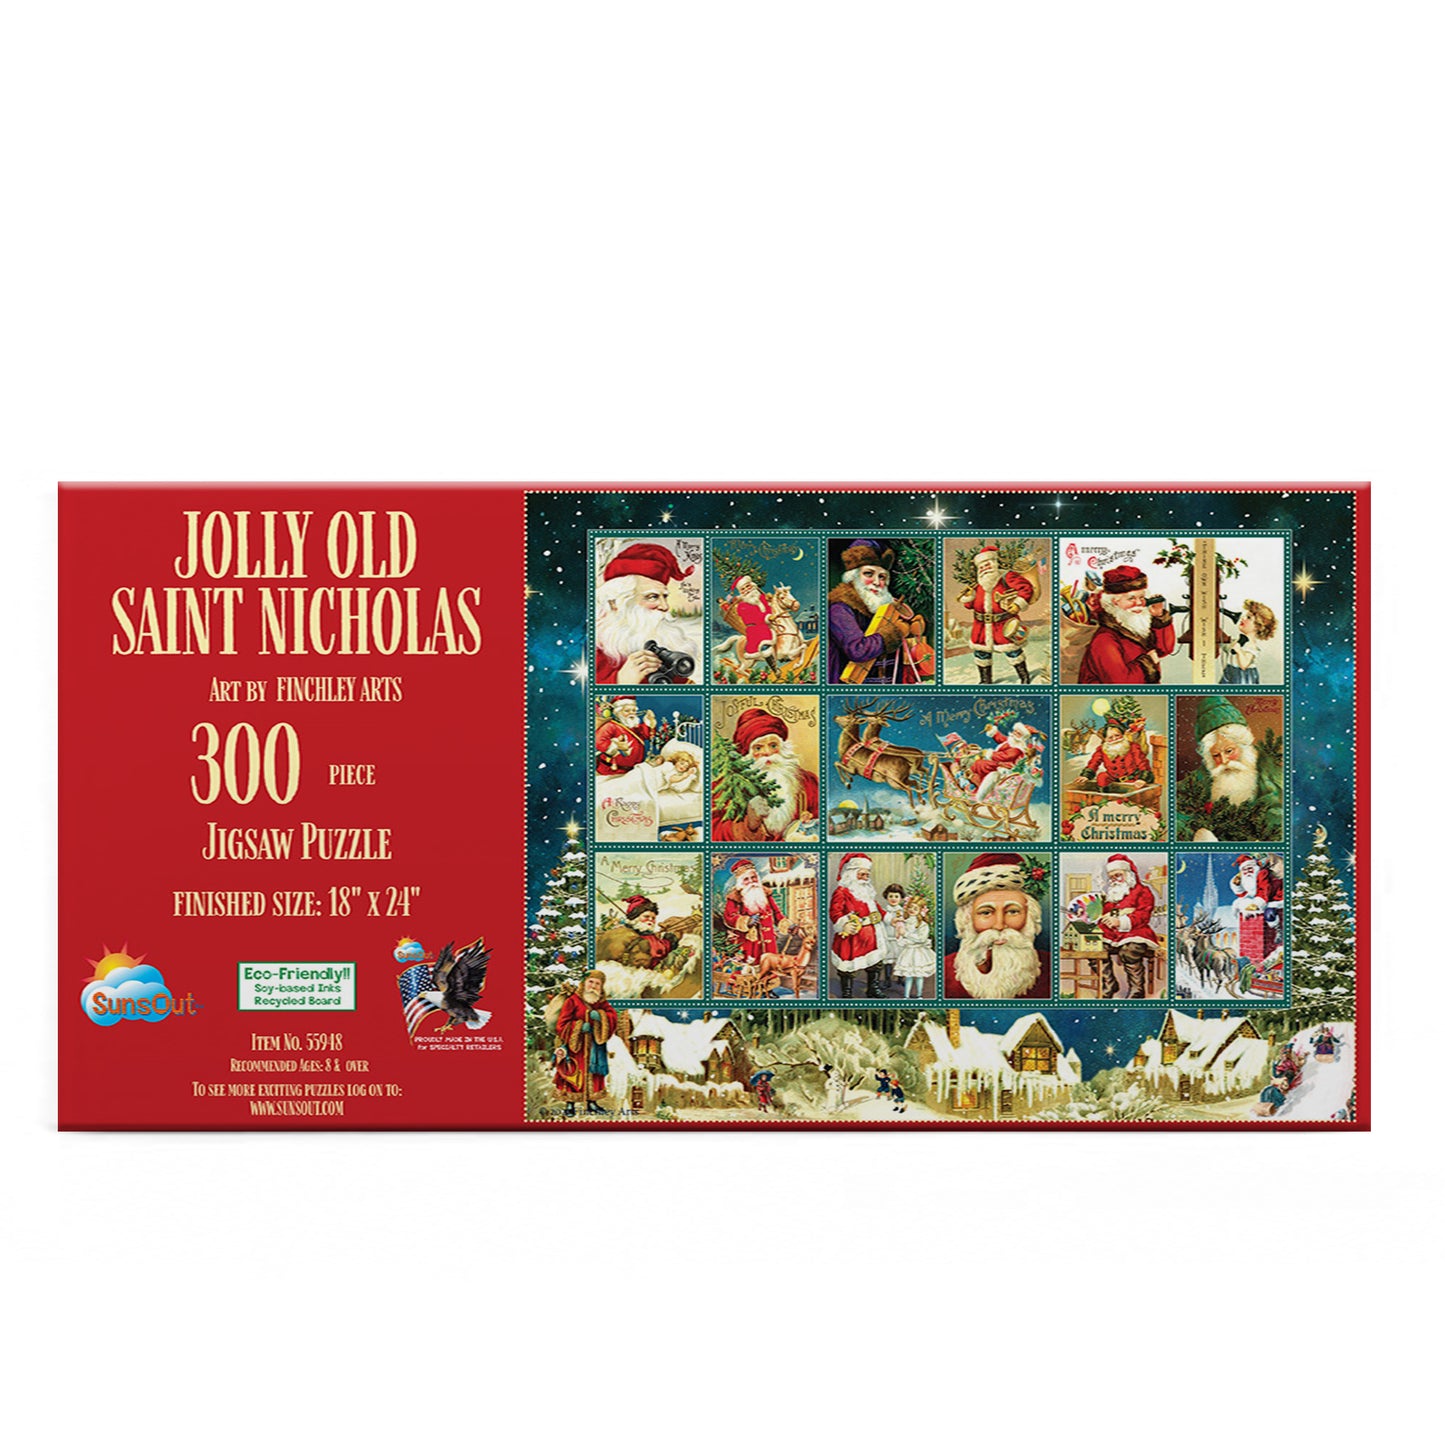 Jolly Old Saint Nicholas - 300 Piece Jigsaw Puzzle